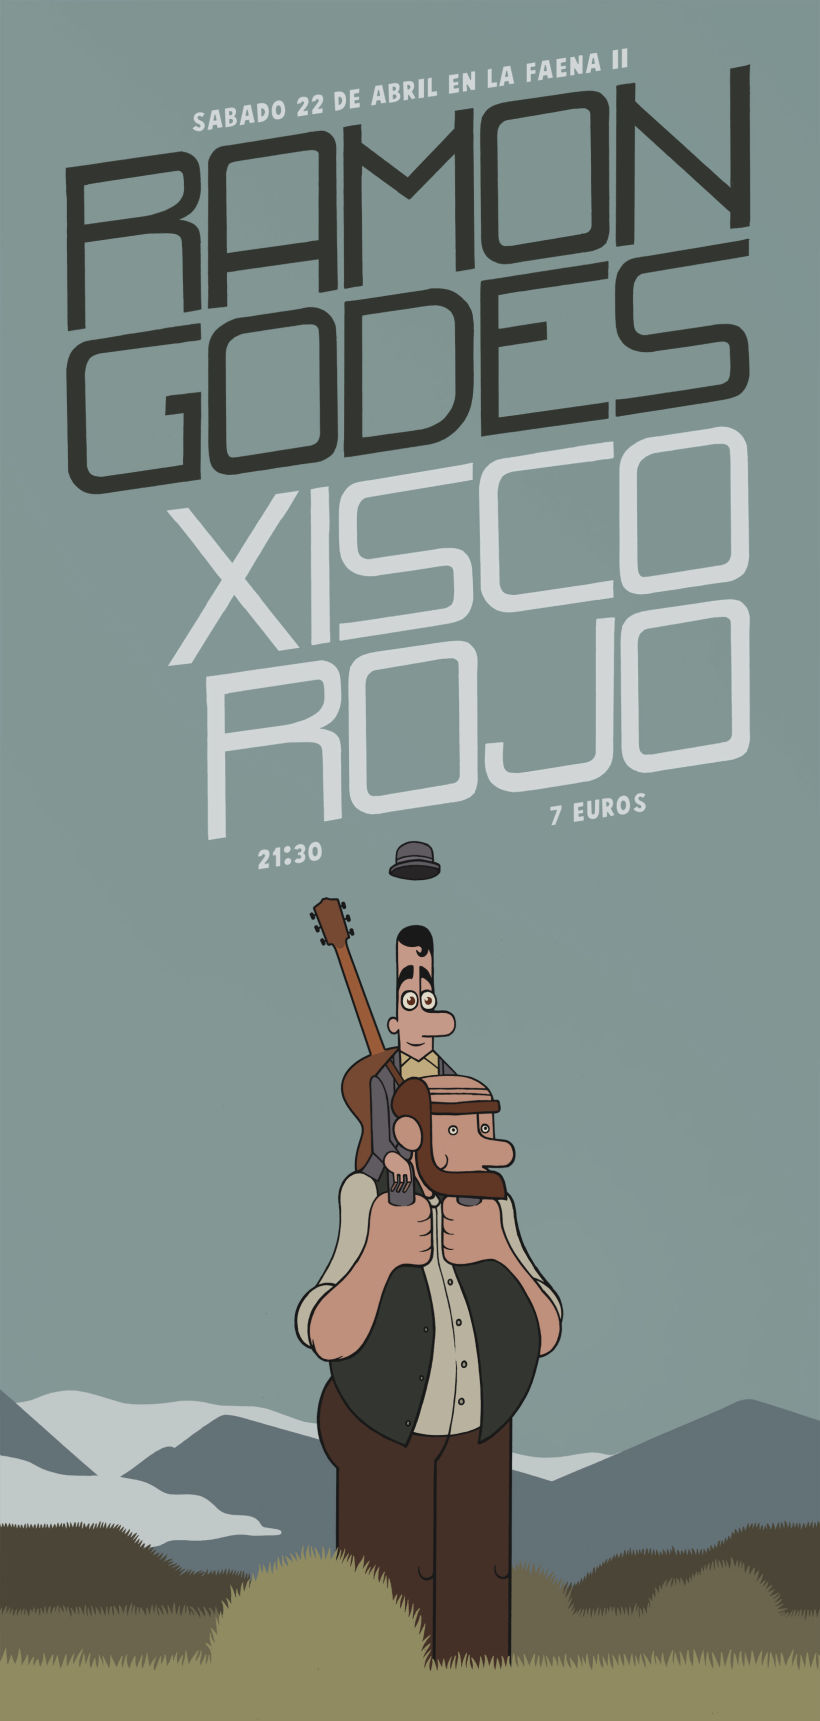 Ramon Godes + Xisco Rojo -1